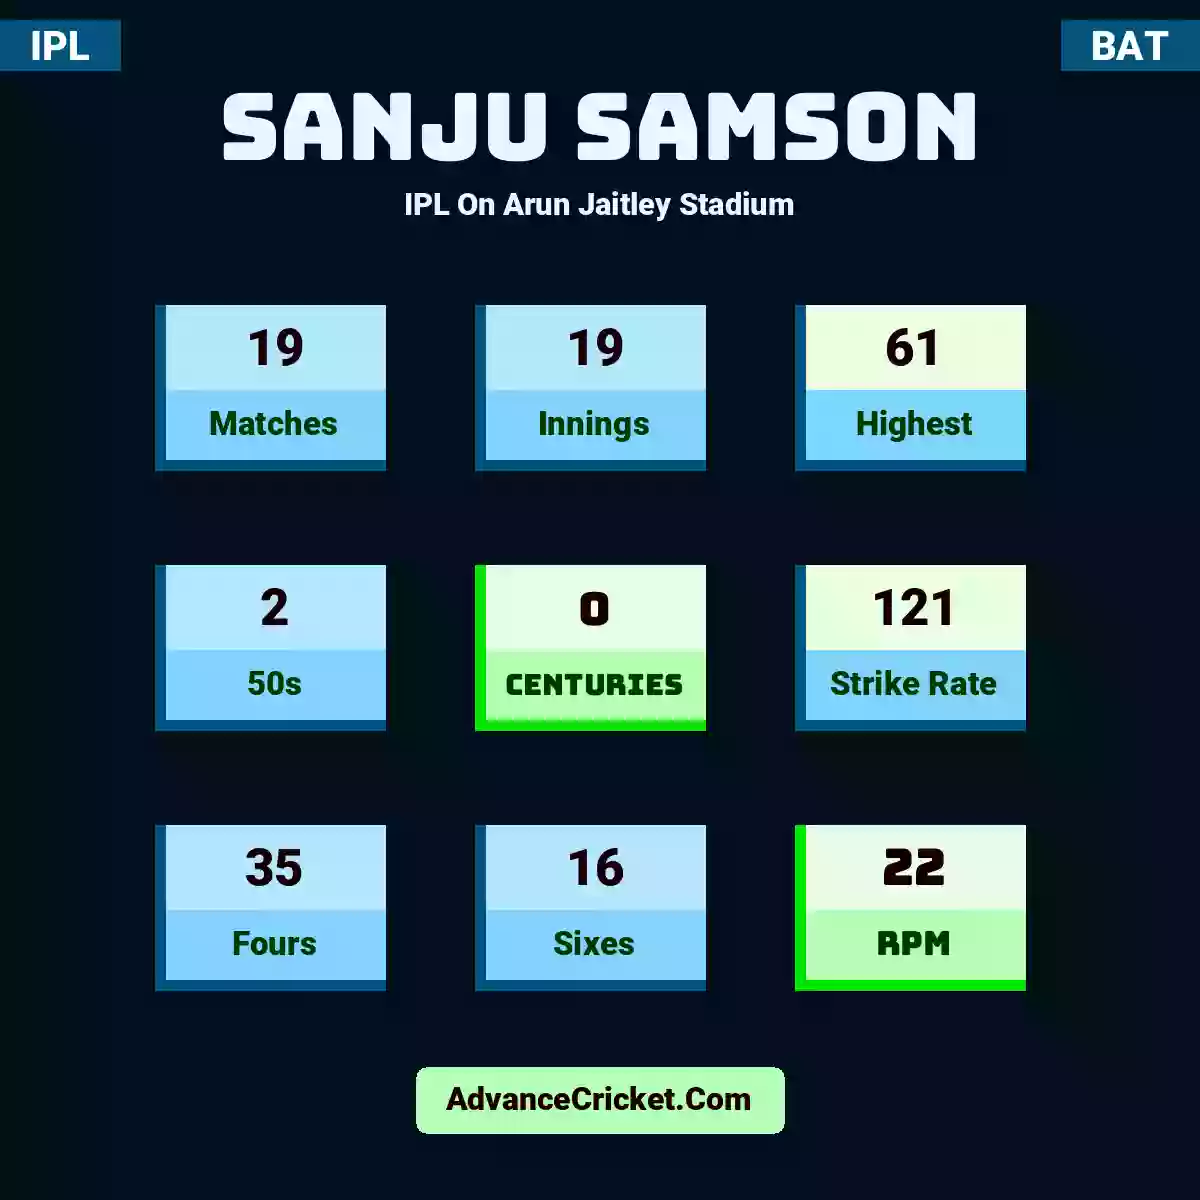 Sanju Samson IPL  On Arun Jaitley Stadium, Sanju Samson played 19 matches, scored 61 runs as highest, 2 half-centuries, and 0 centuries, with a strike rate of 121. S.Samson hit 35 fours and 16 sixes, with an RPM of 22.